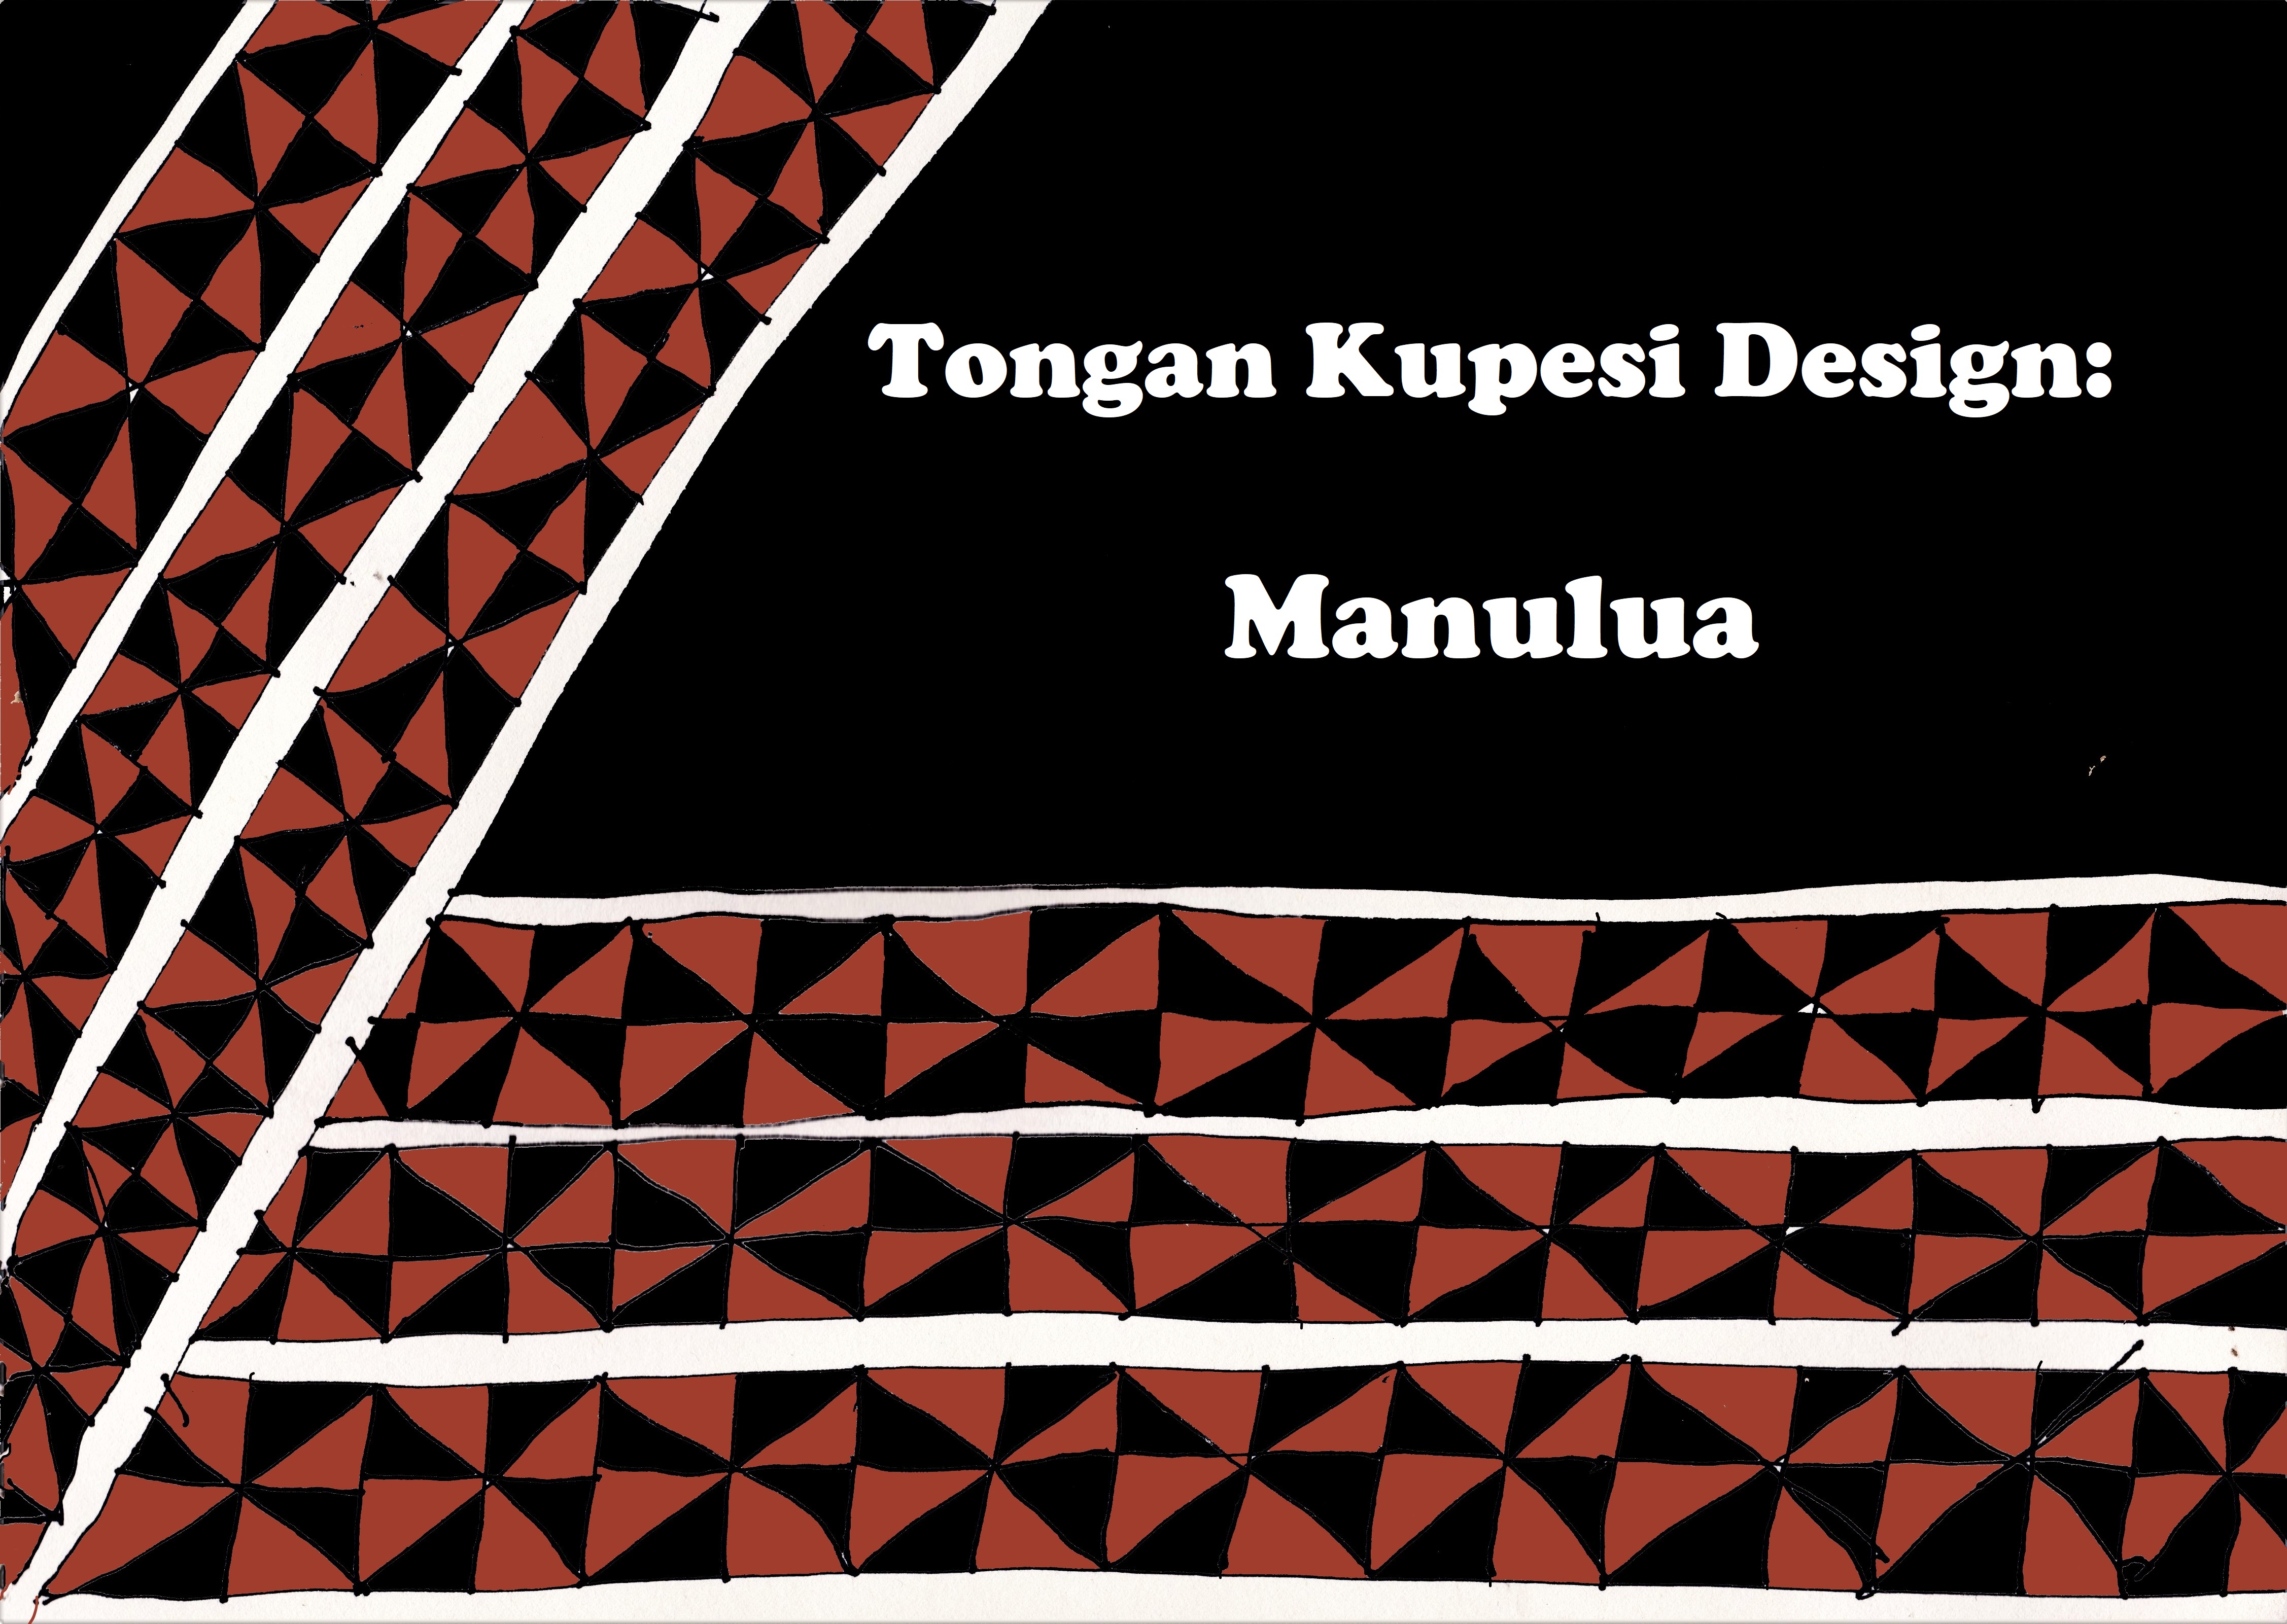 Tongan Kupesi Design: Manulua